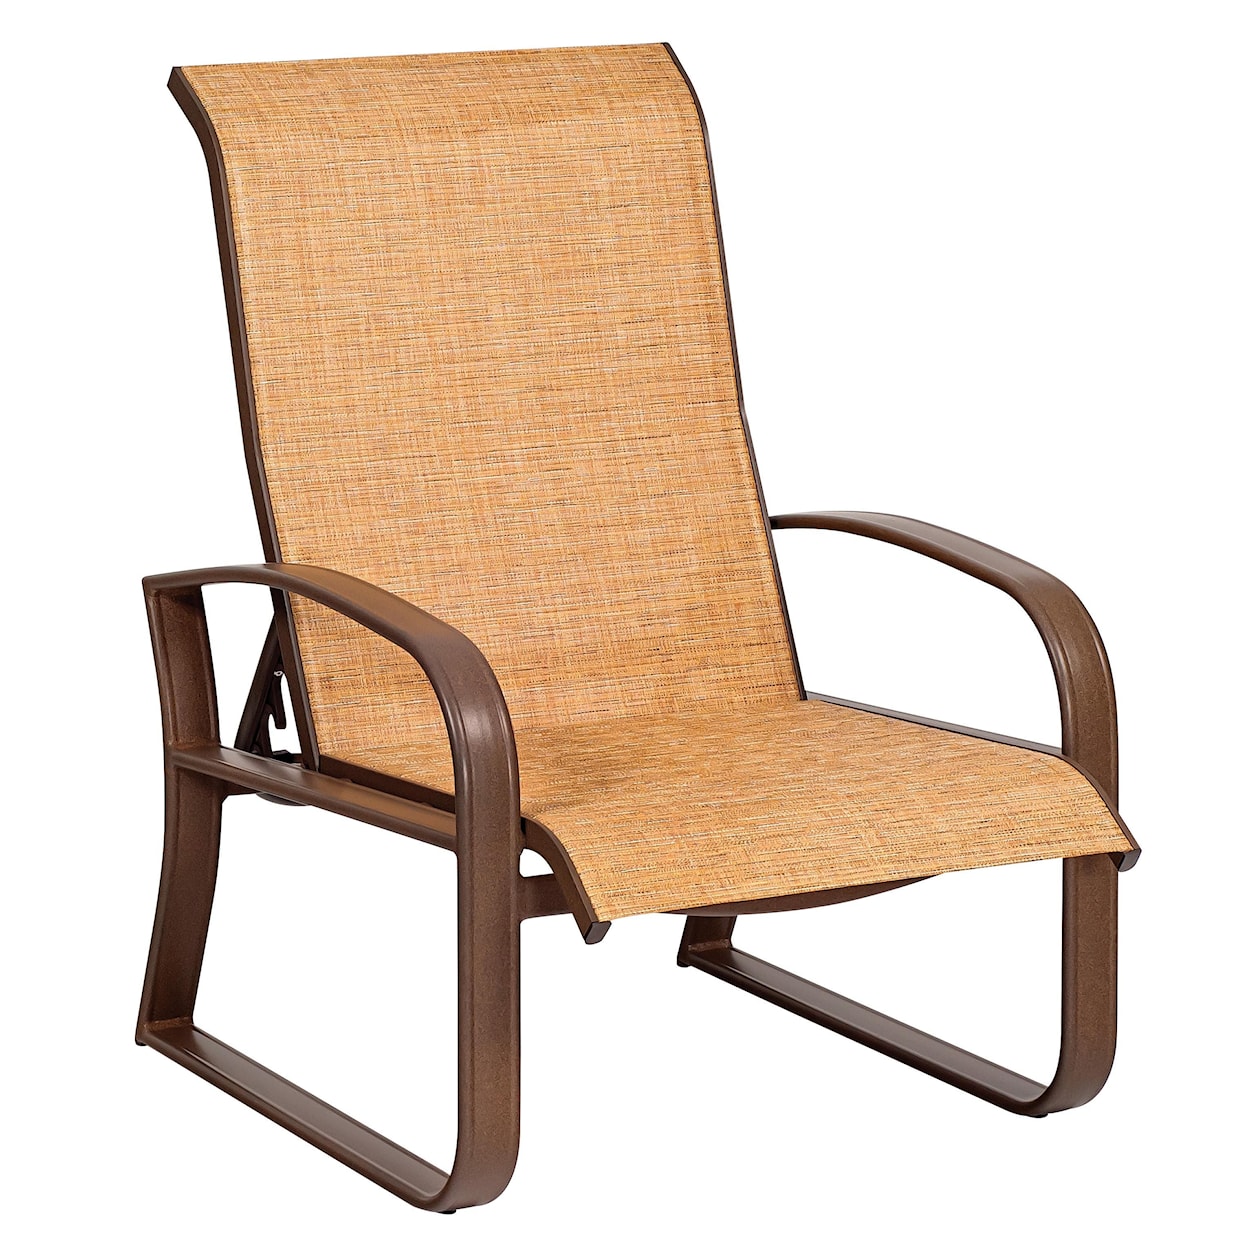 Woodard Cayman Isle Cayman Isle Sling Adjustable Lounge Chair